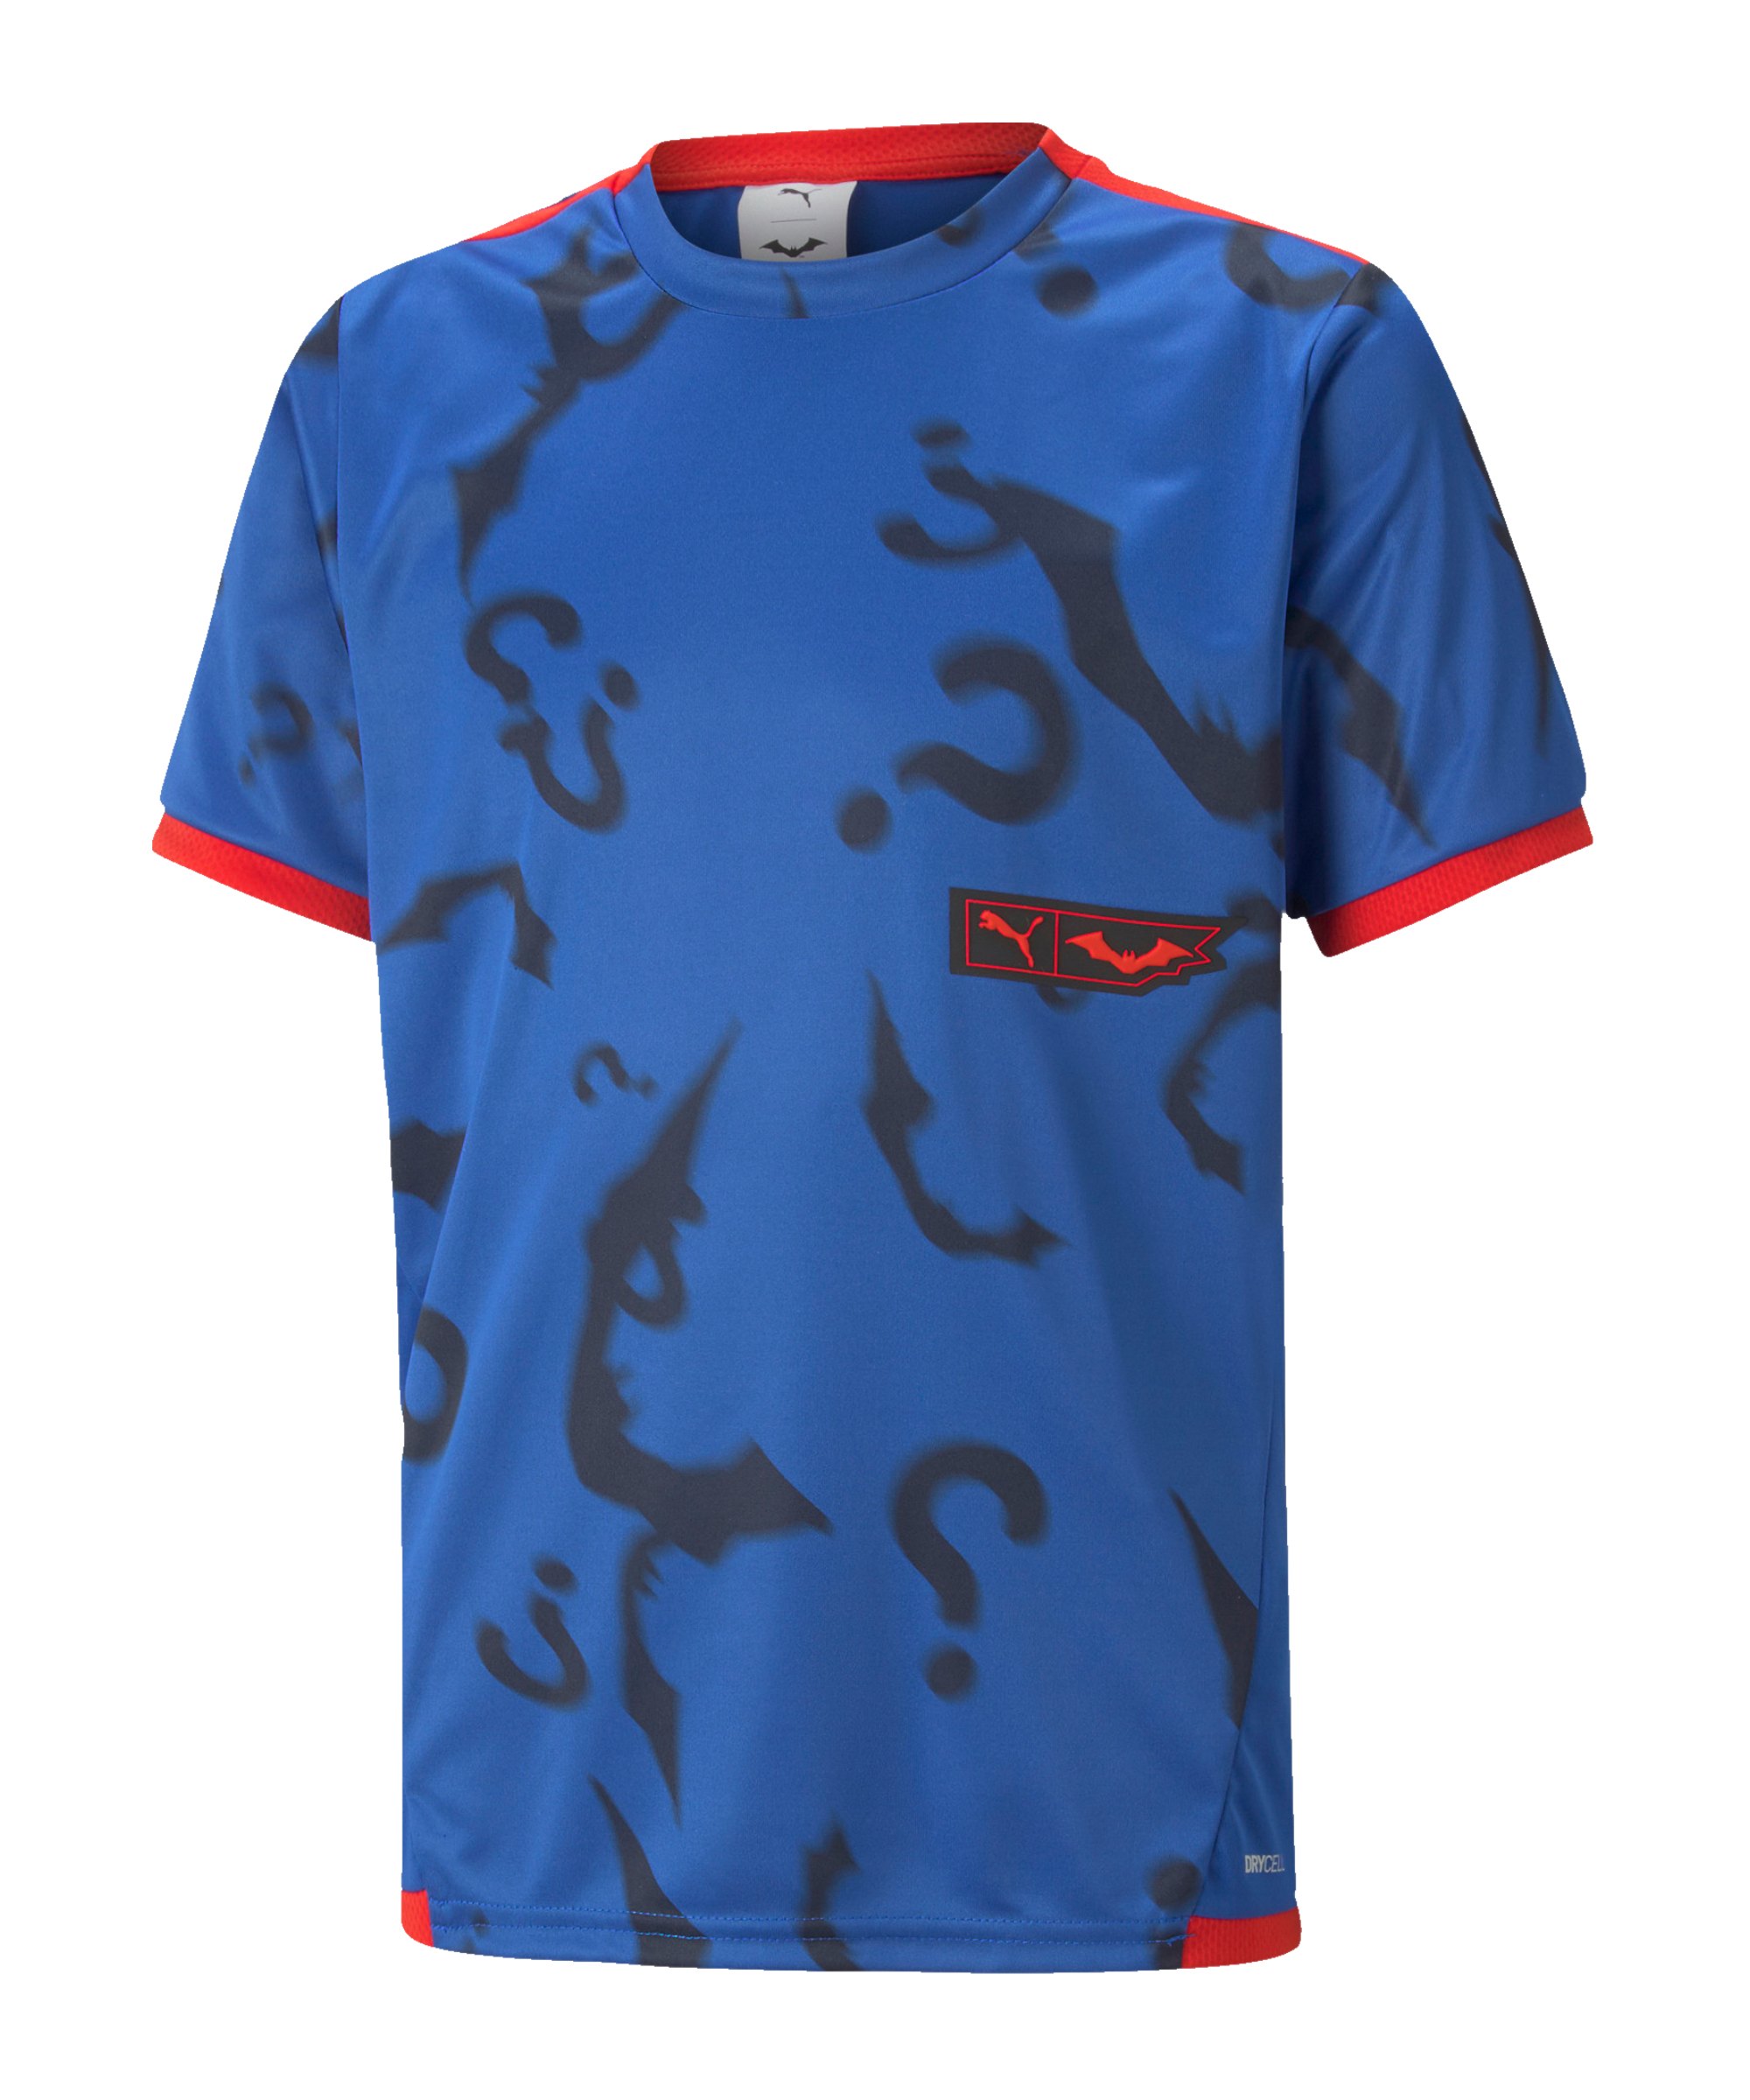 PUMA X BATMAN Graphic T-Shirt Kids Blau F02 - blau